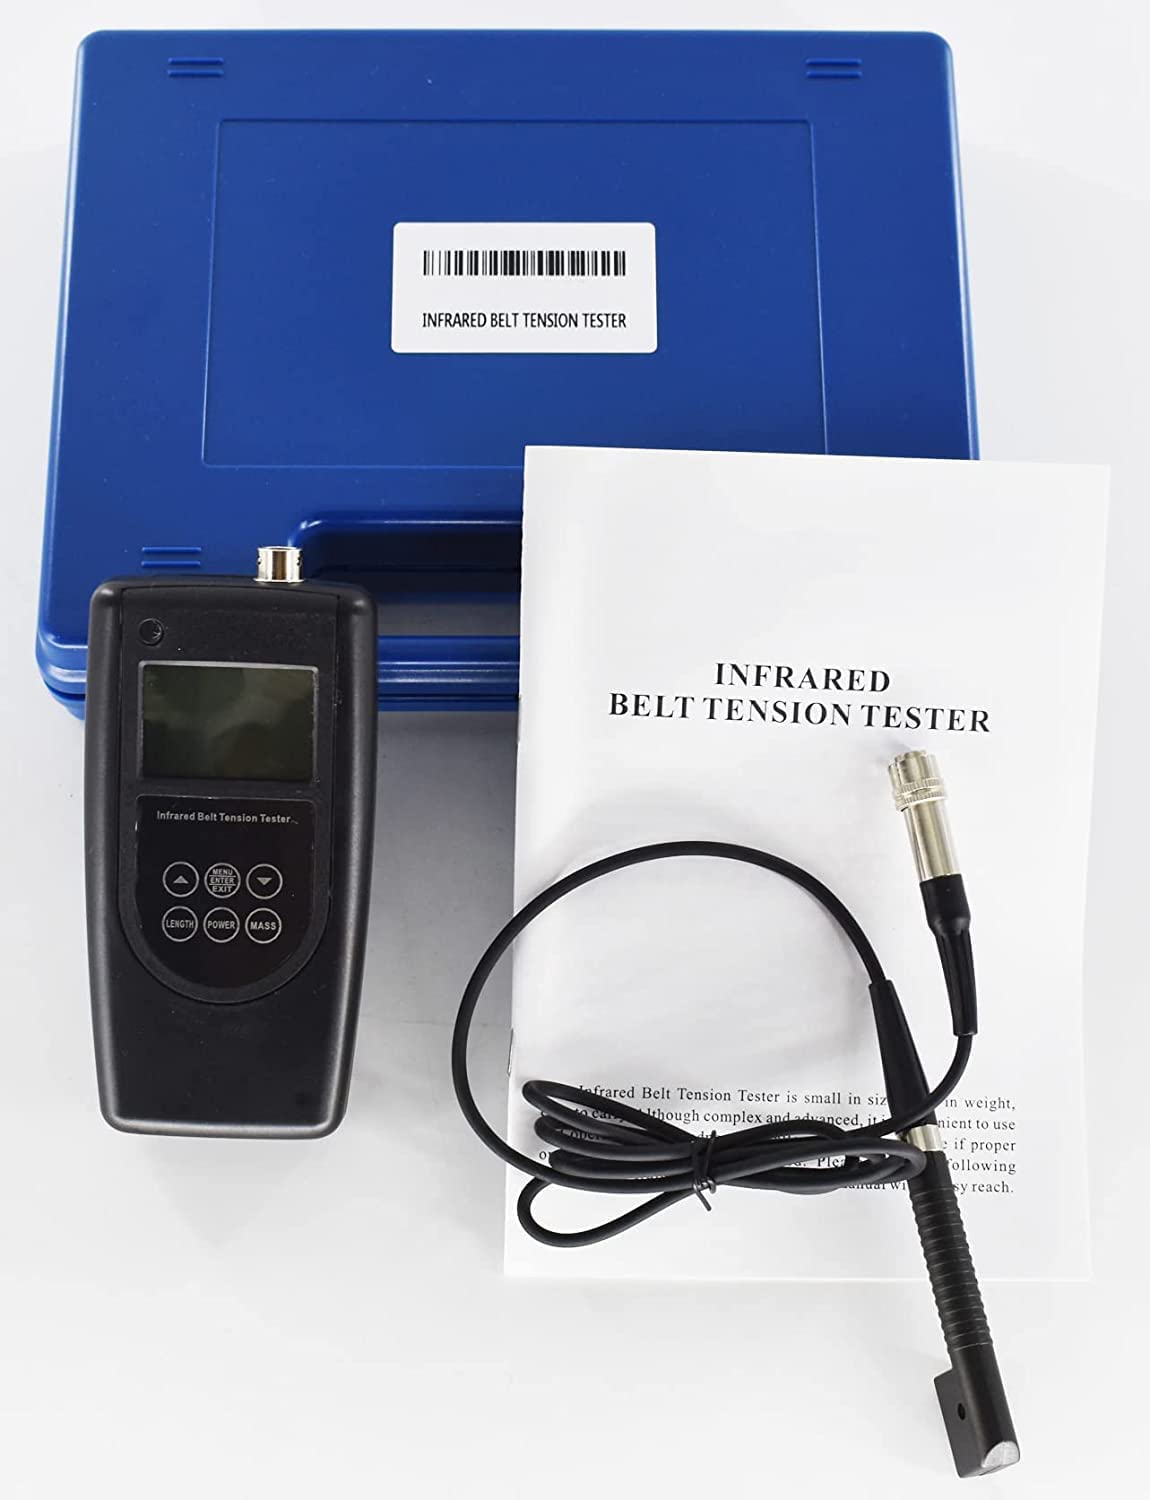 VTSYIQI Infrared Belt Tensiometer Belt Tension Tester Meter Gauge with Laser Sensor Measurement Range 10Hz~500Hz Measure Belt Tension in Motors and Other Machinery